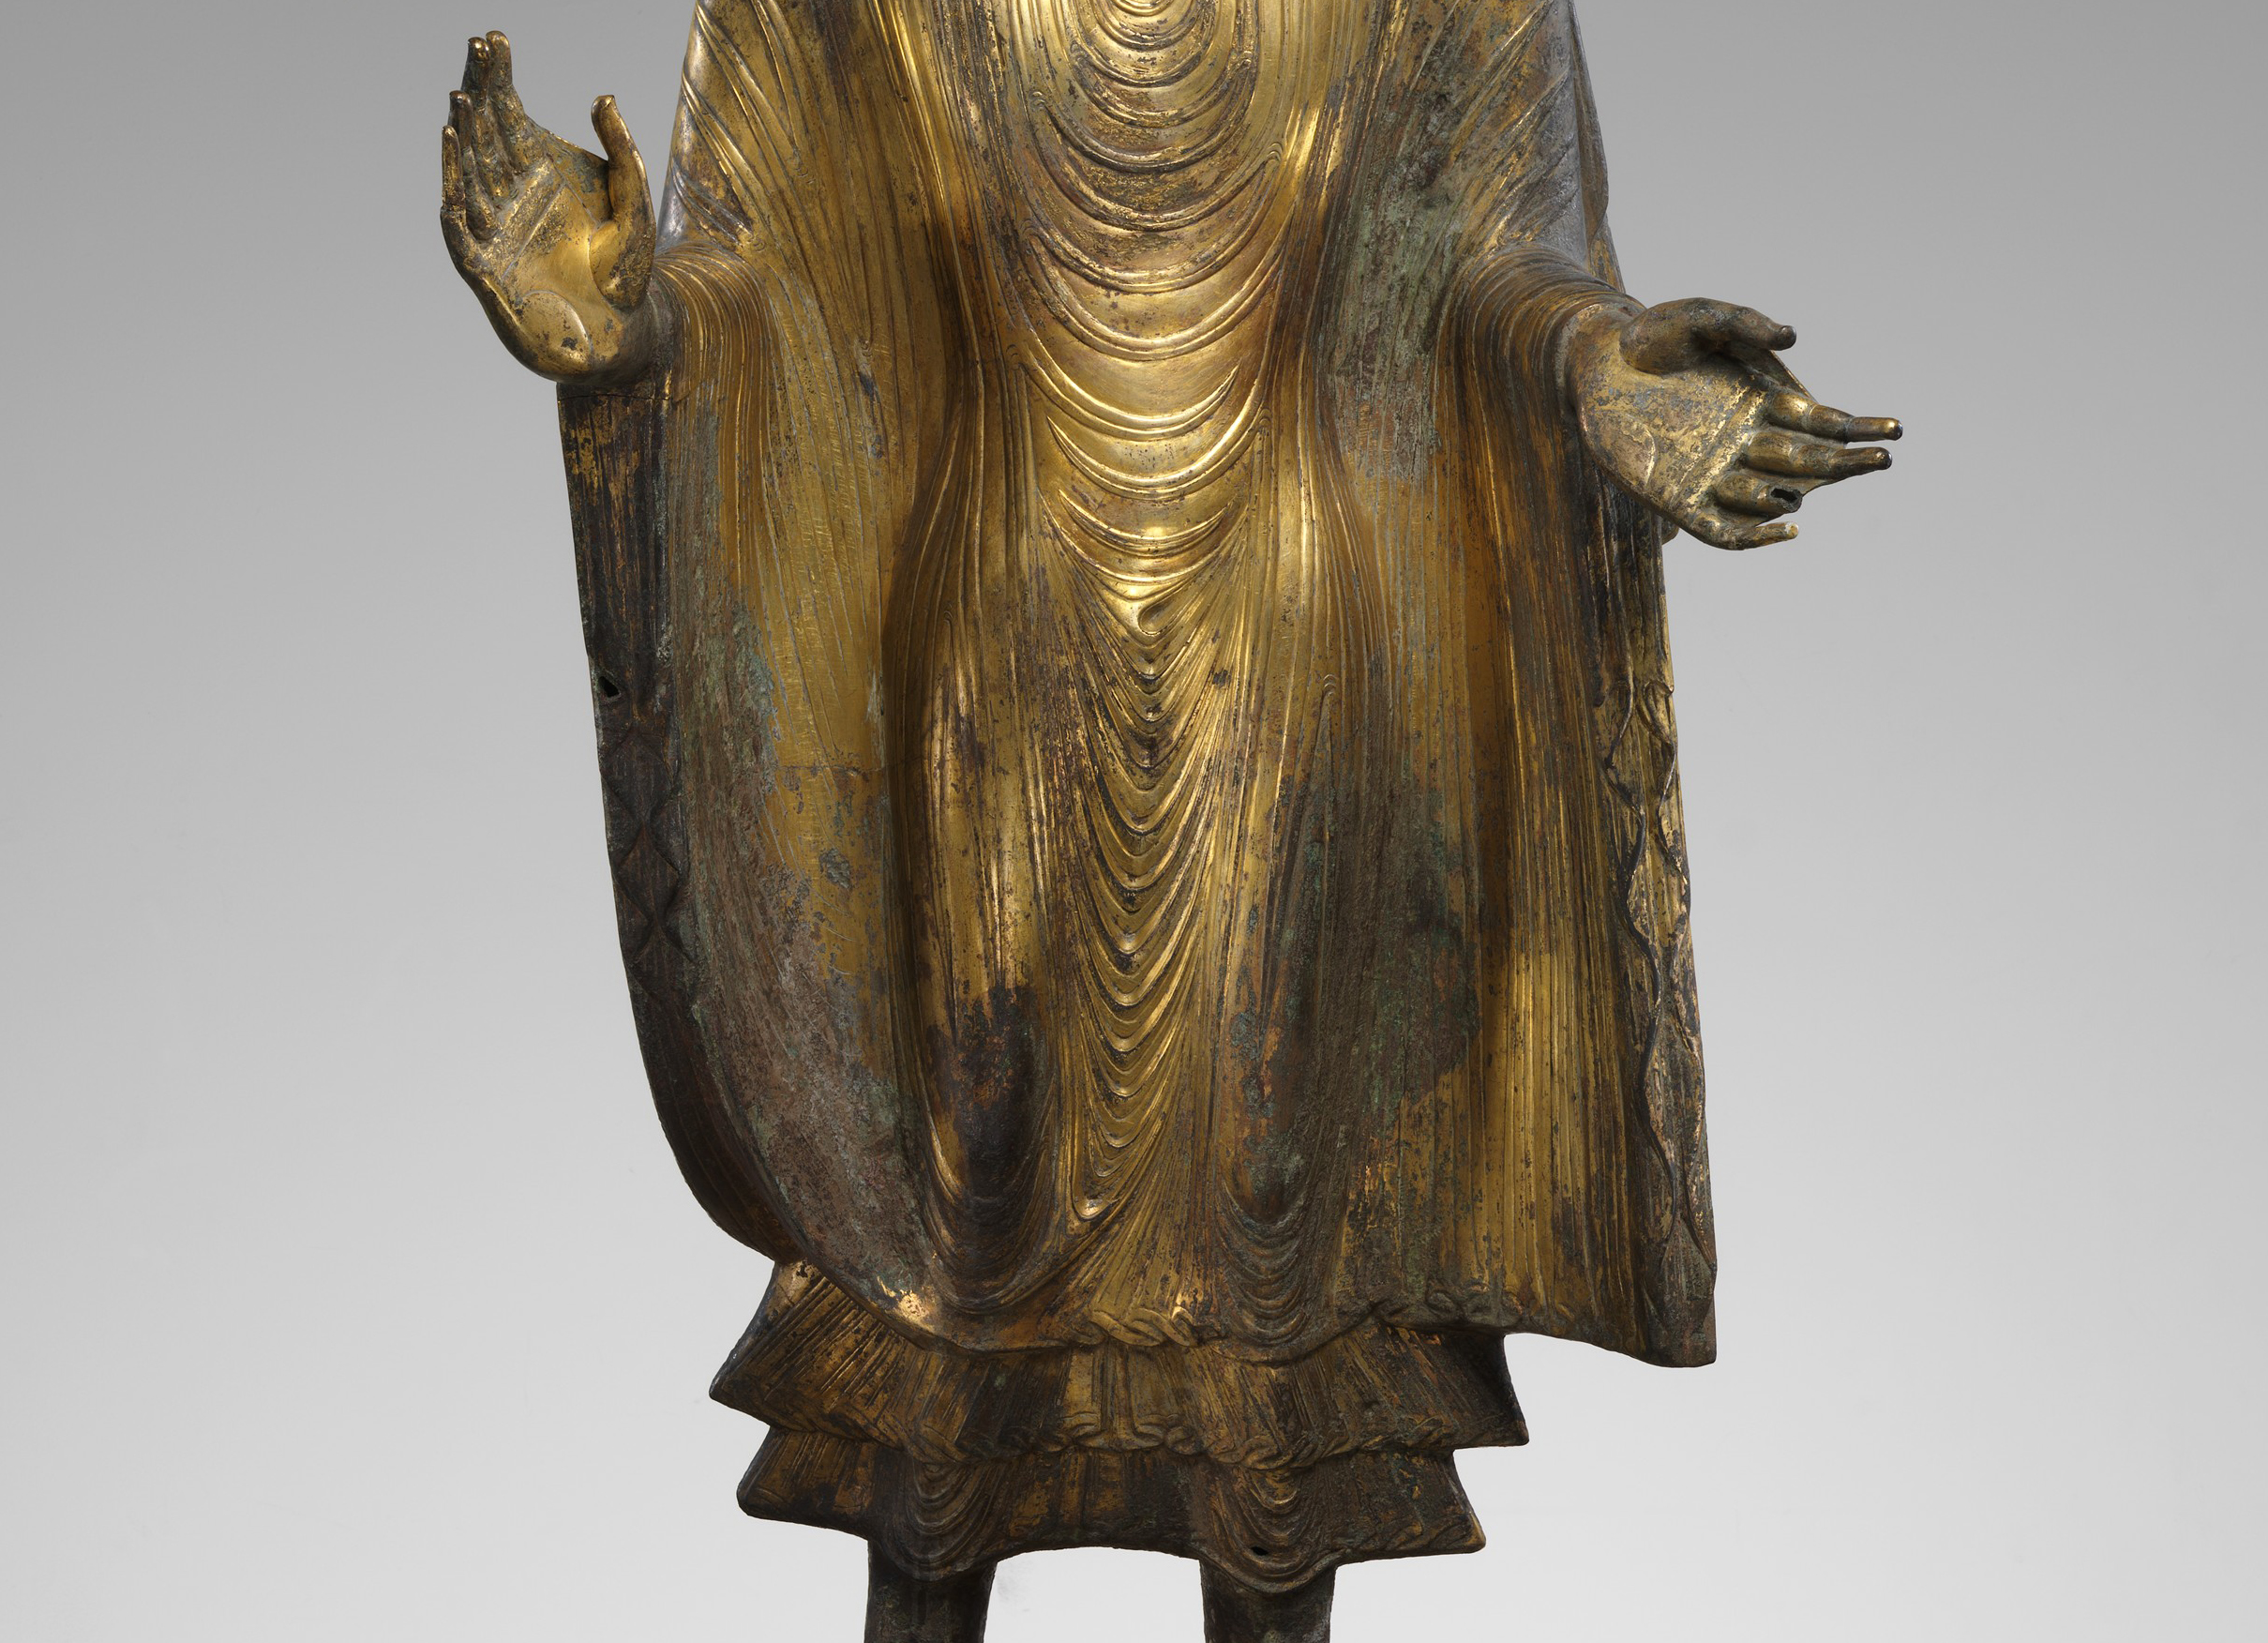 Gilt-bronze Buddha with inscription: “seventh year of yeonga“